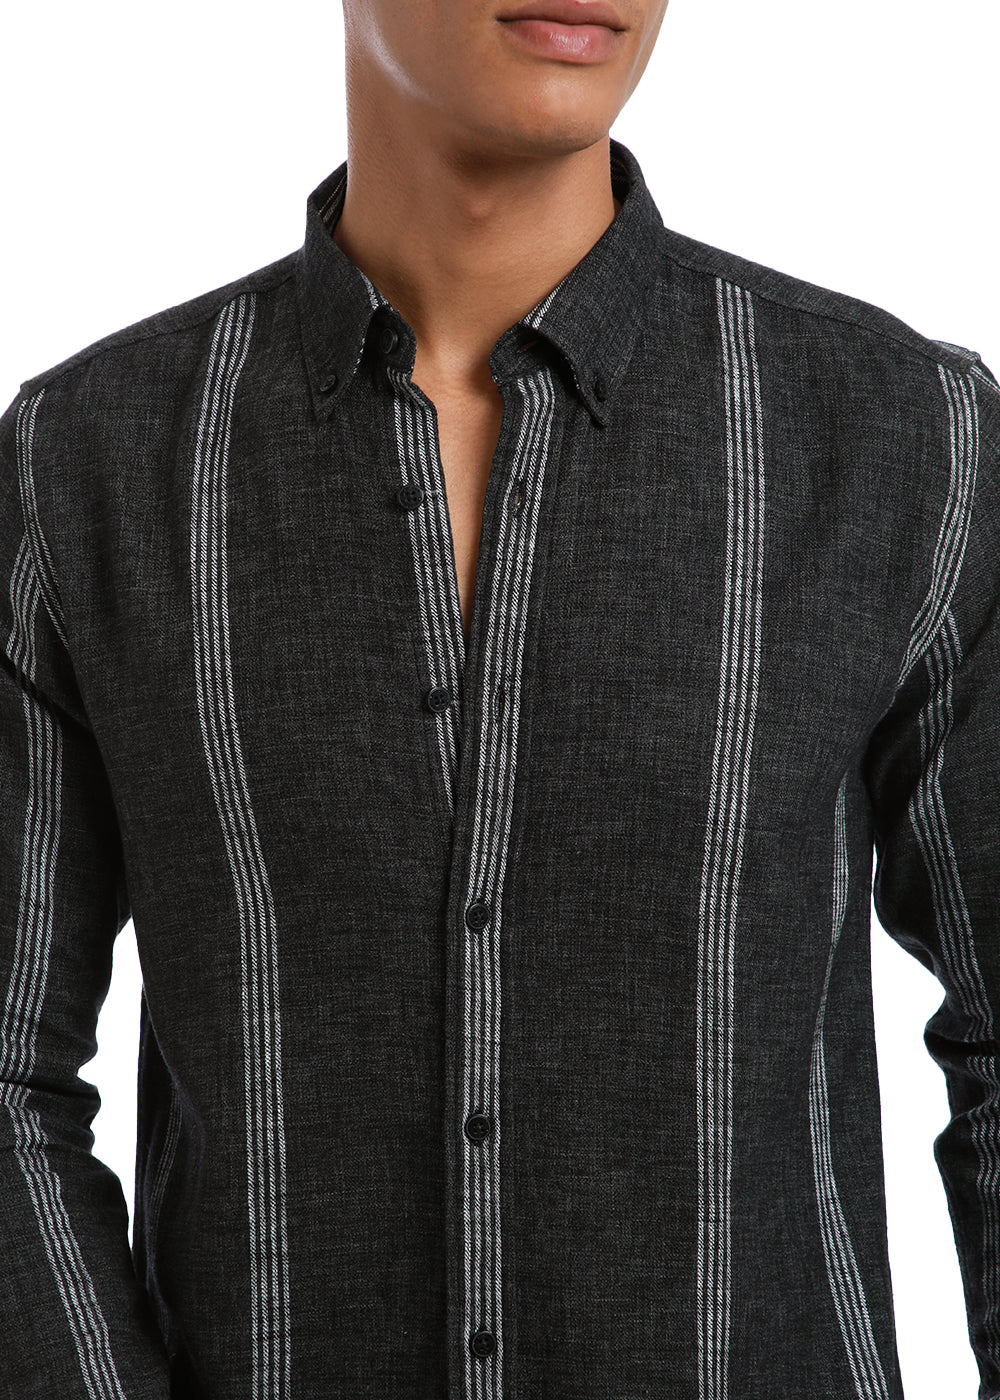 Melange Stick Black Stripe shirt